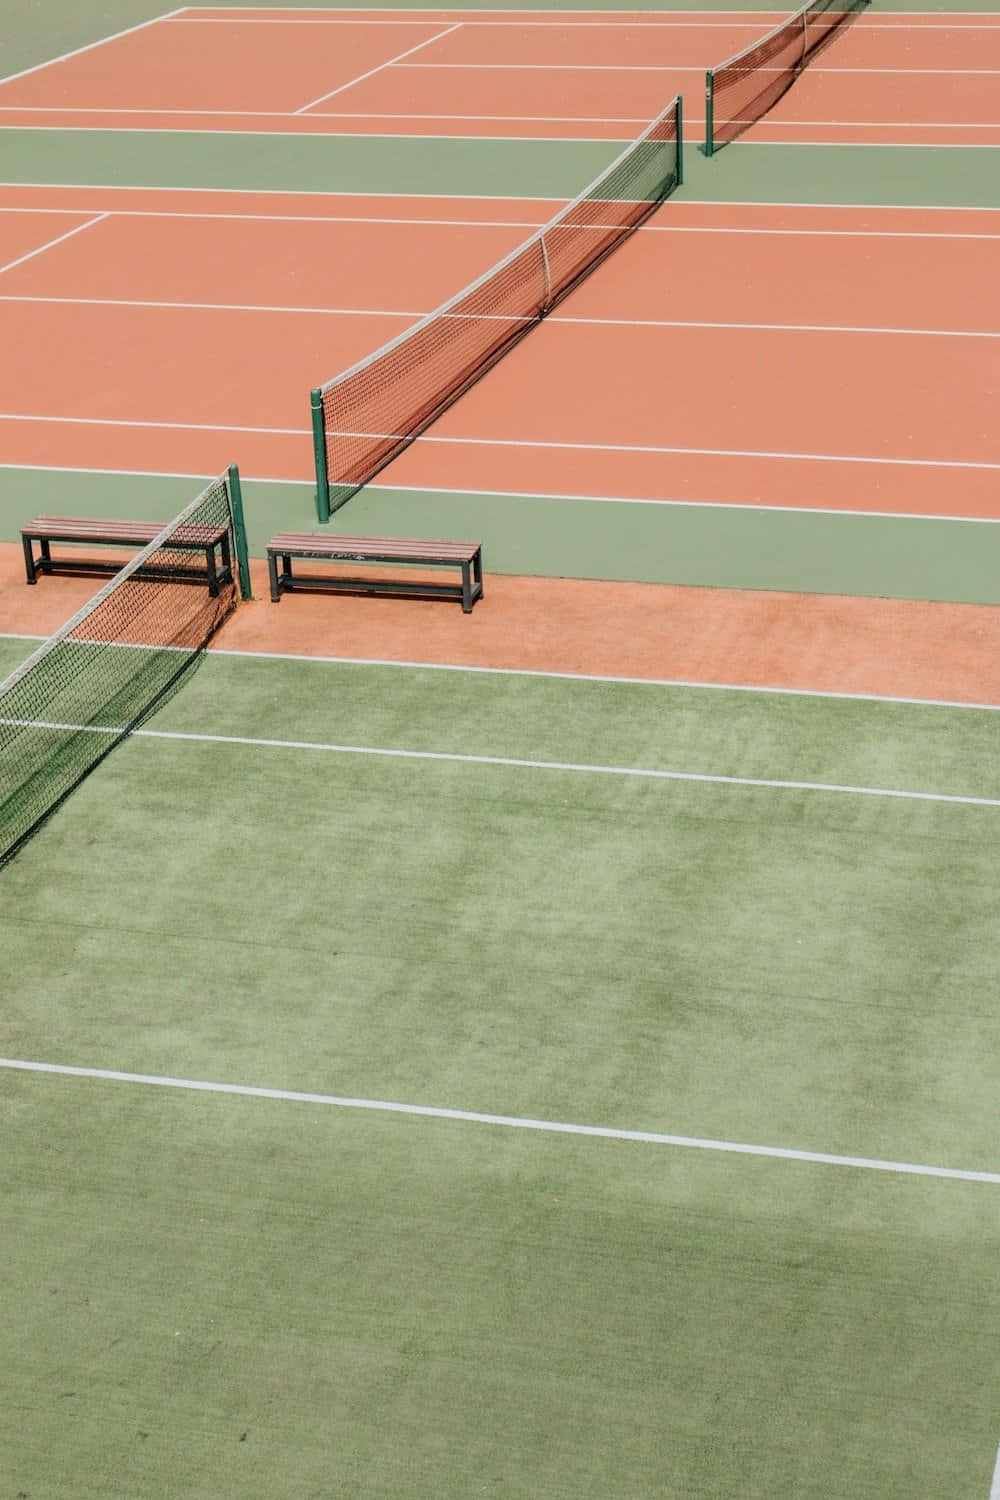 Tennis Court Aerial View.jpg Wallpaper